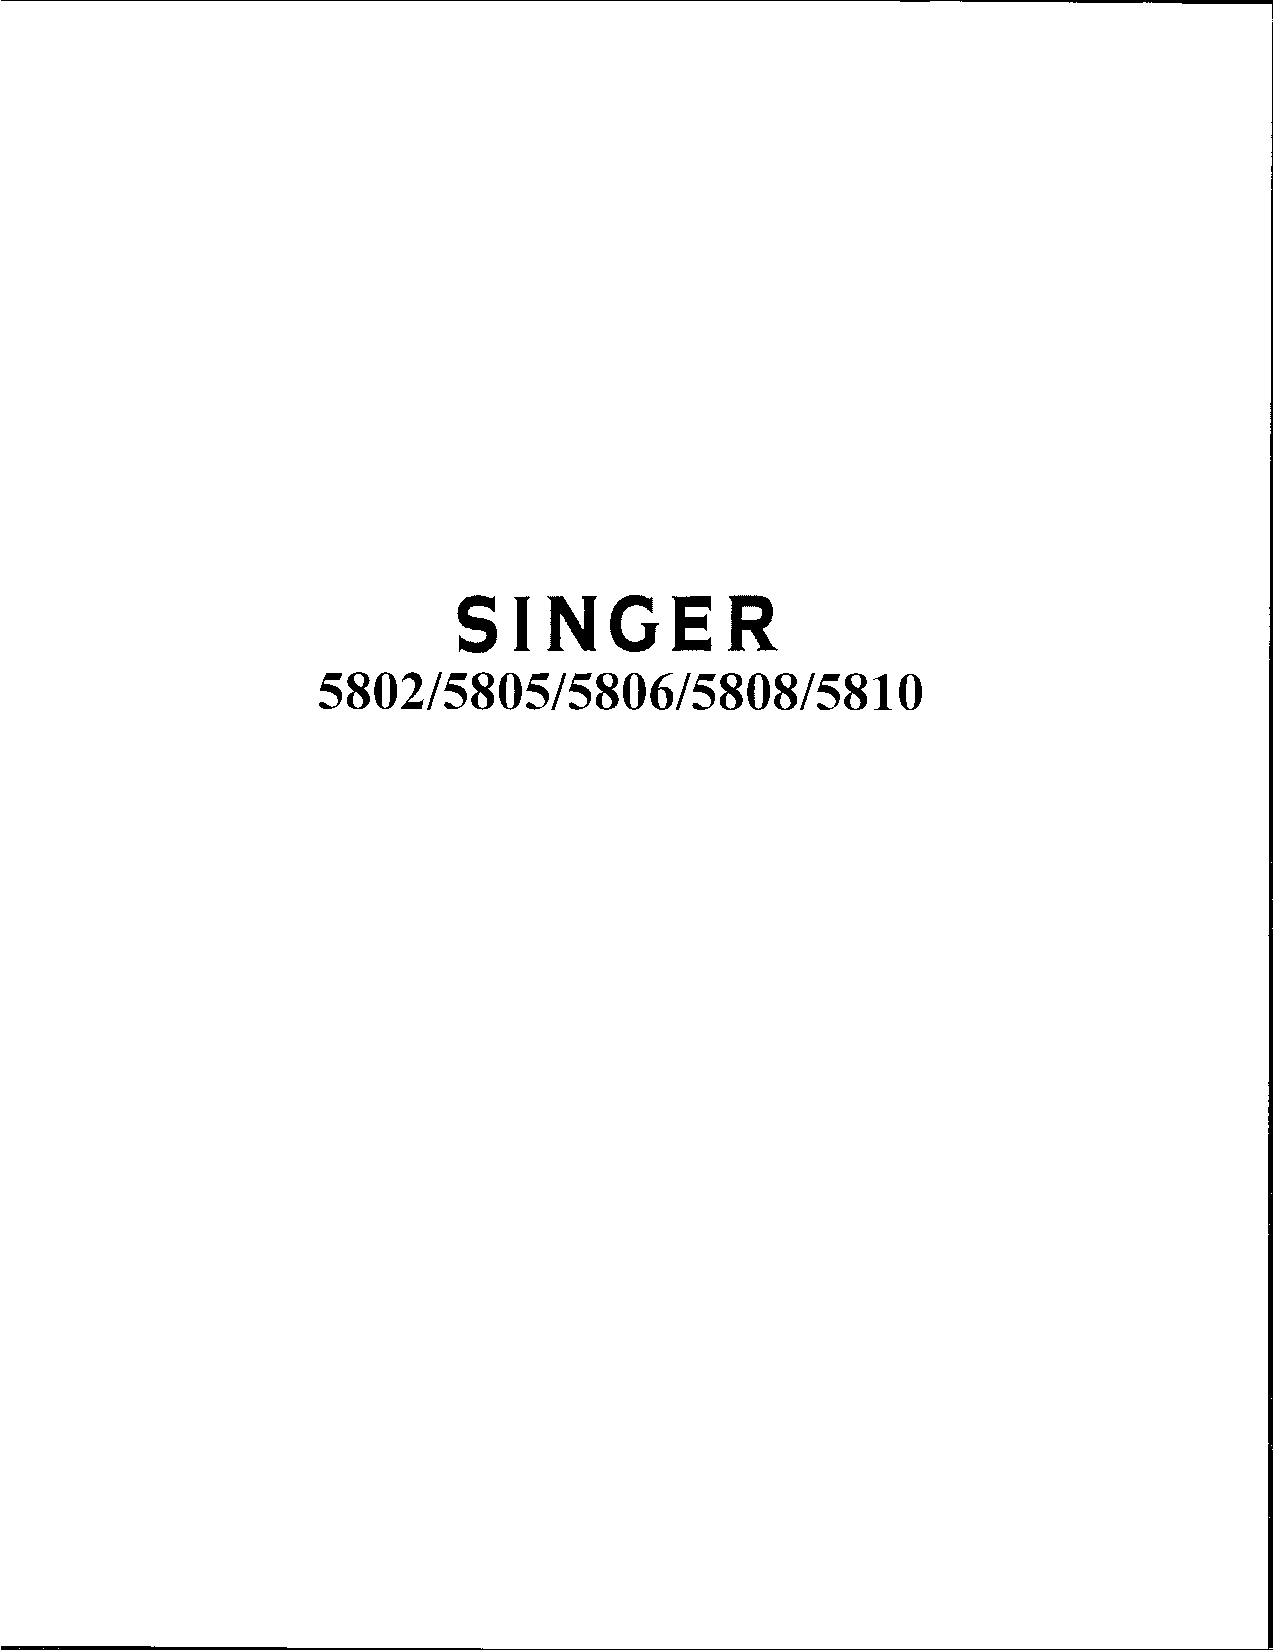 Singer 5802, 5806, 5808, 5810, 5805 User Manual